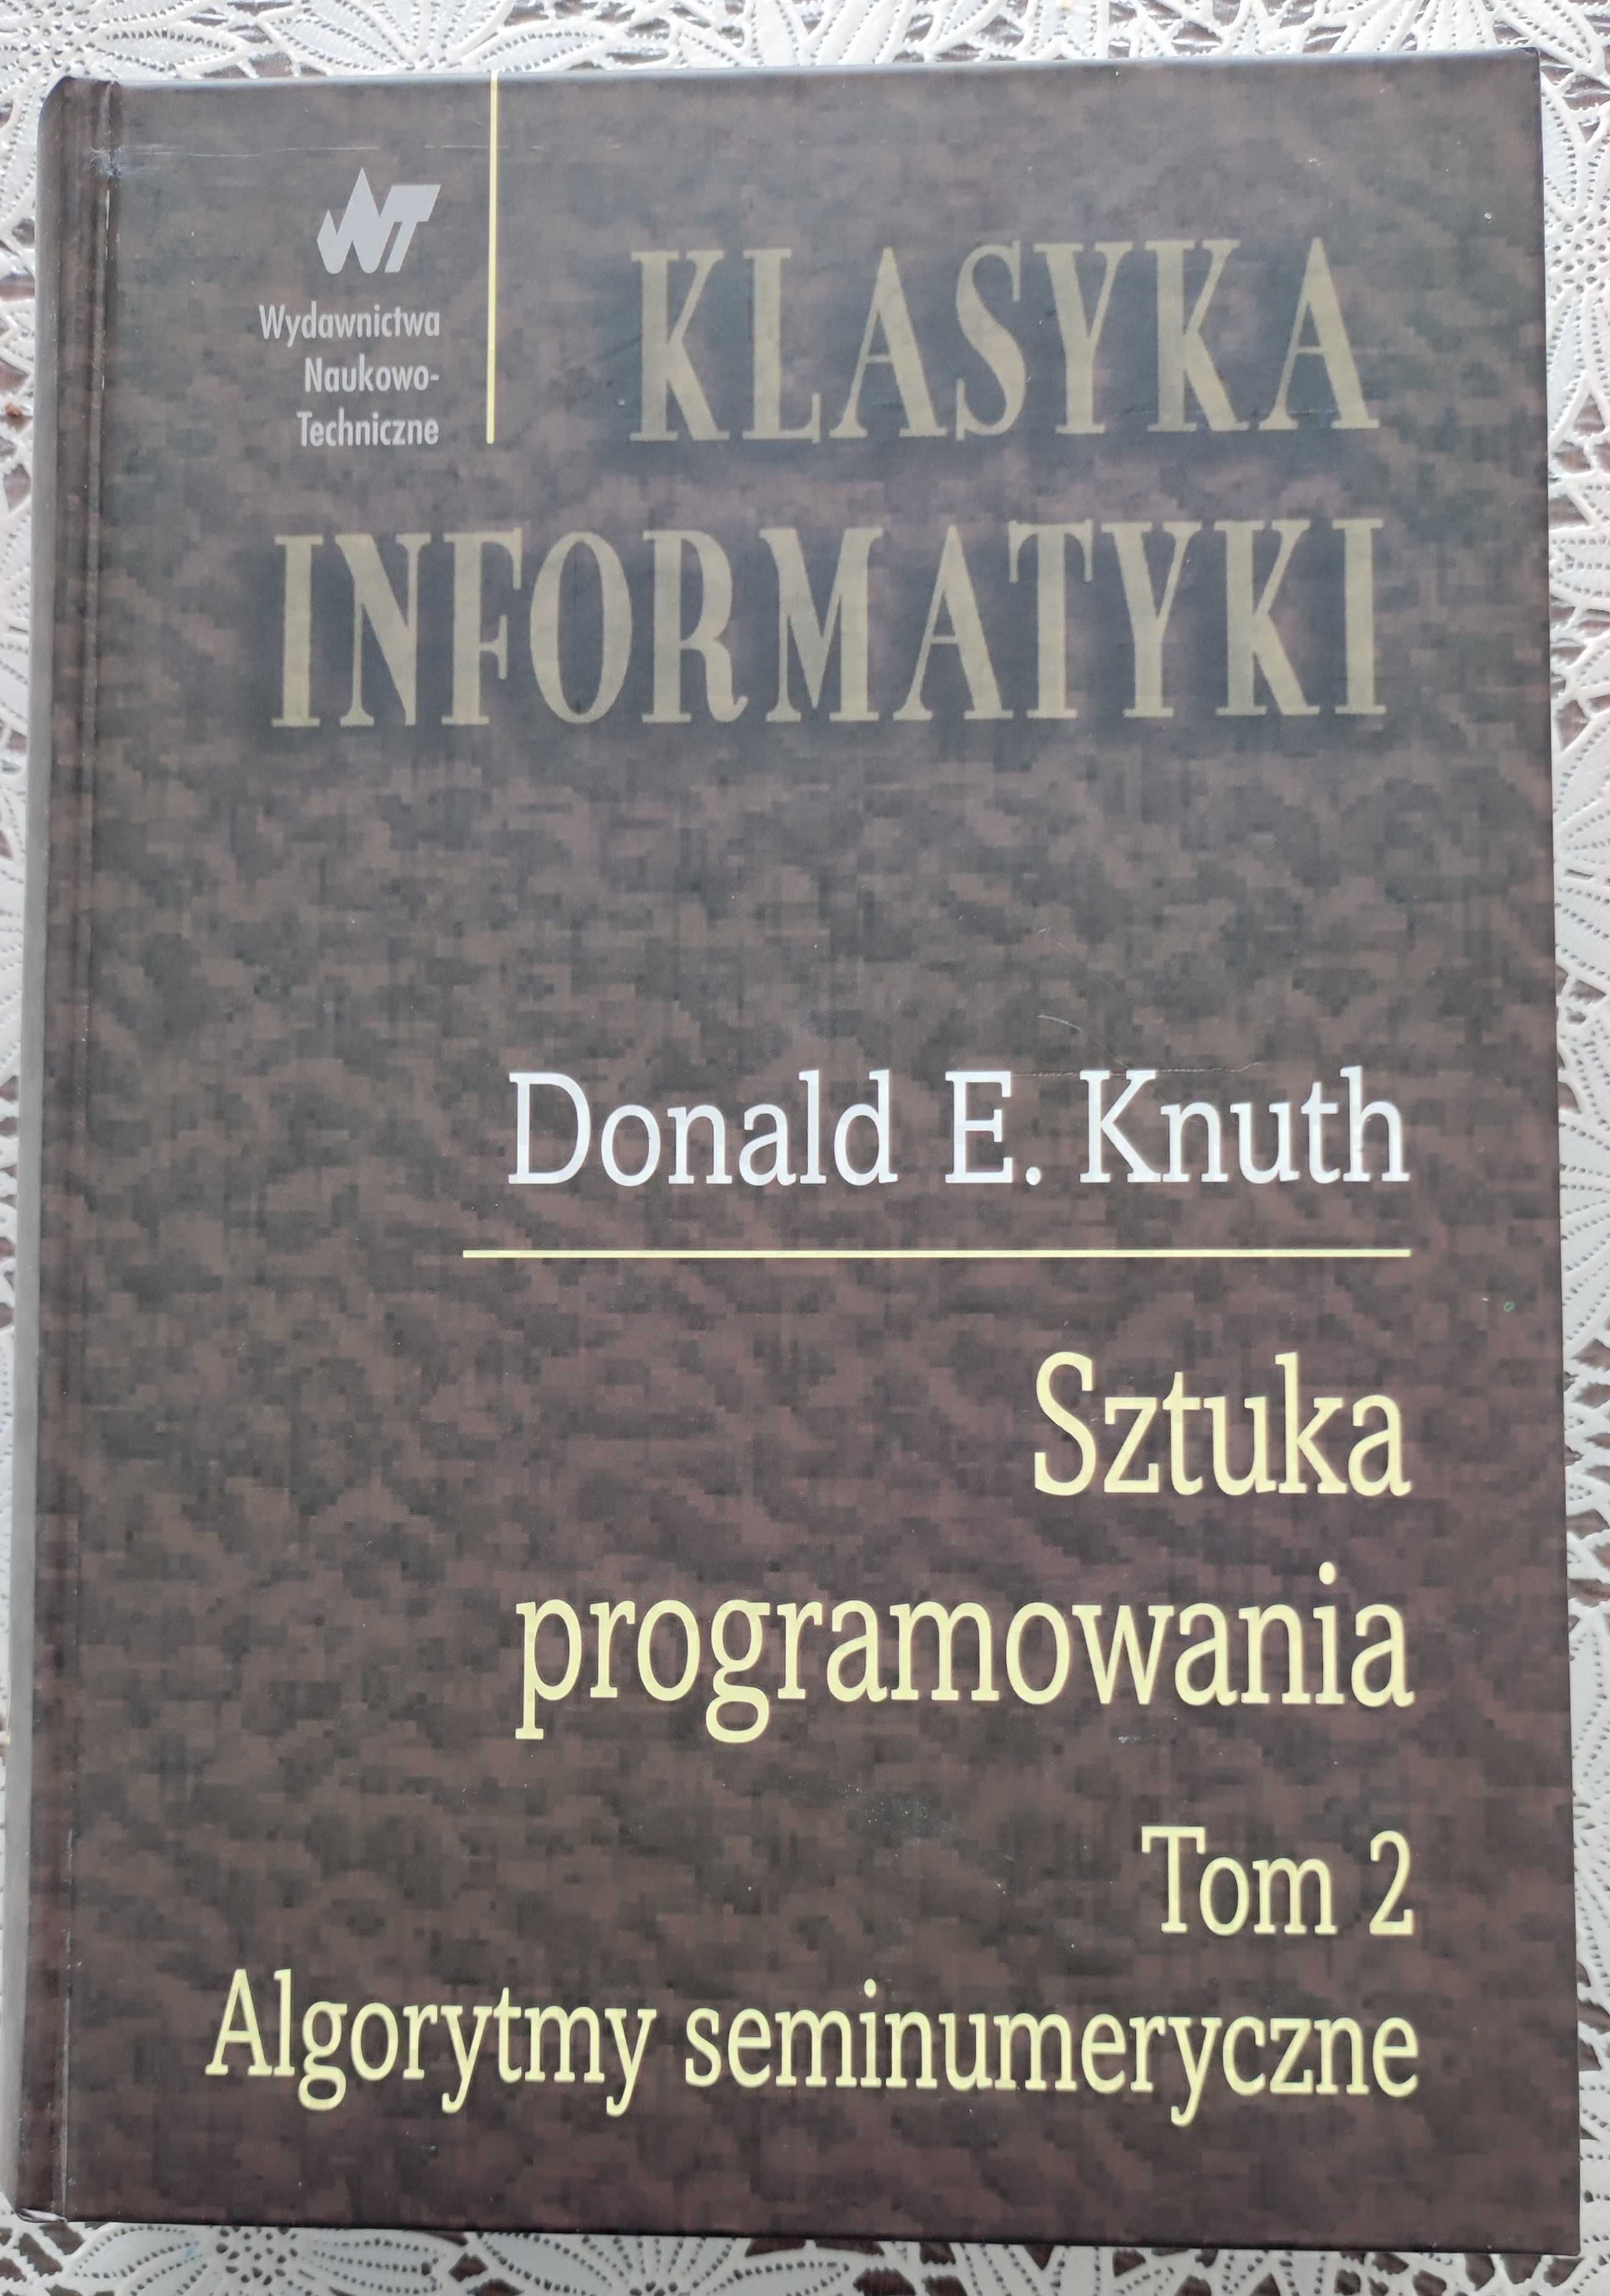 Donald E. Knuth "Sztuka programowania" tom.1-3